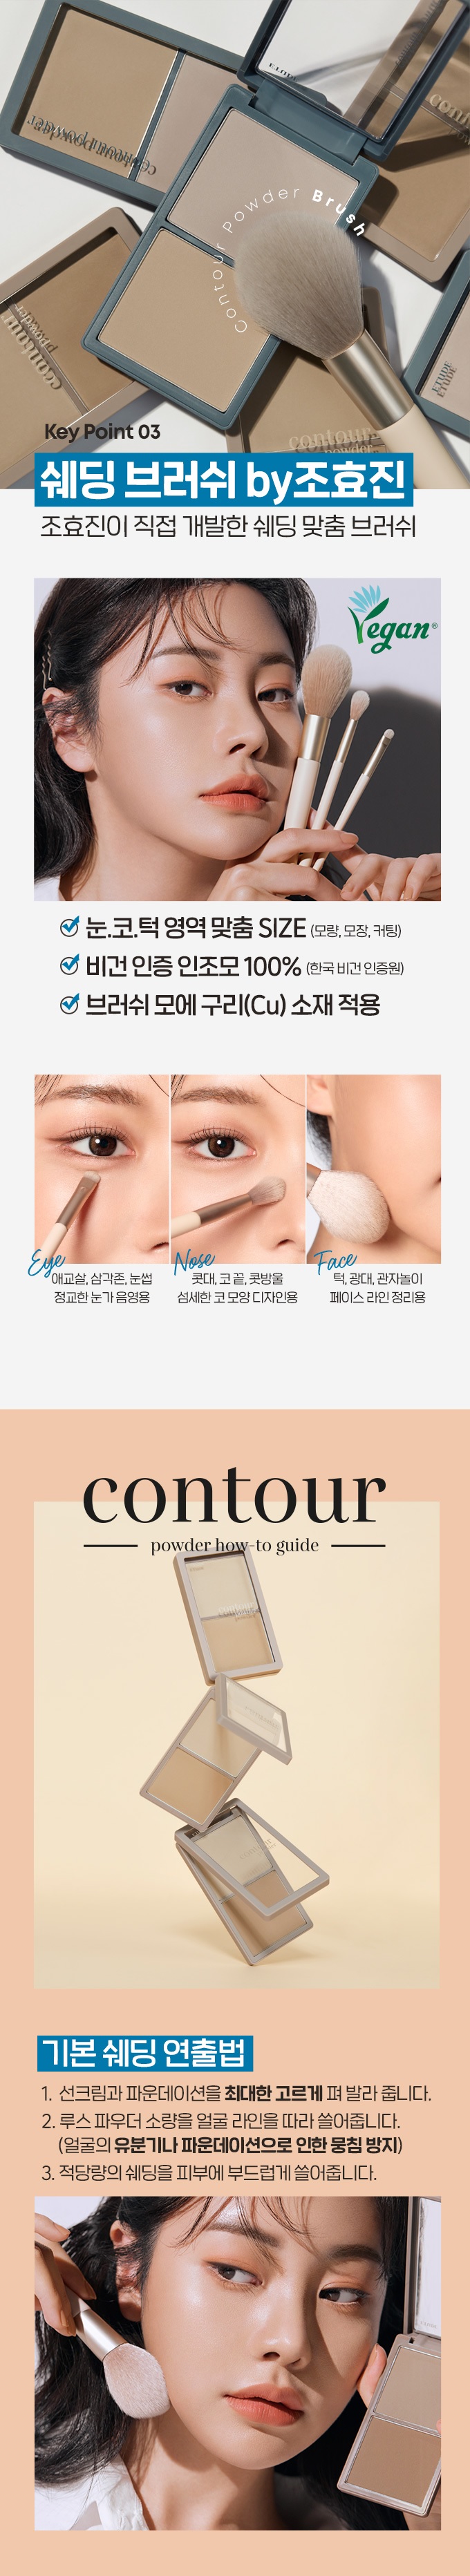 Etude House Contour Powder korean skincare product online shop malaysia china india3